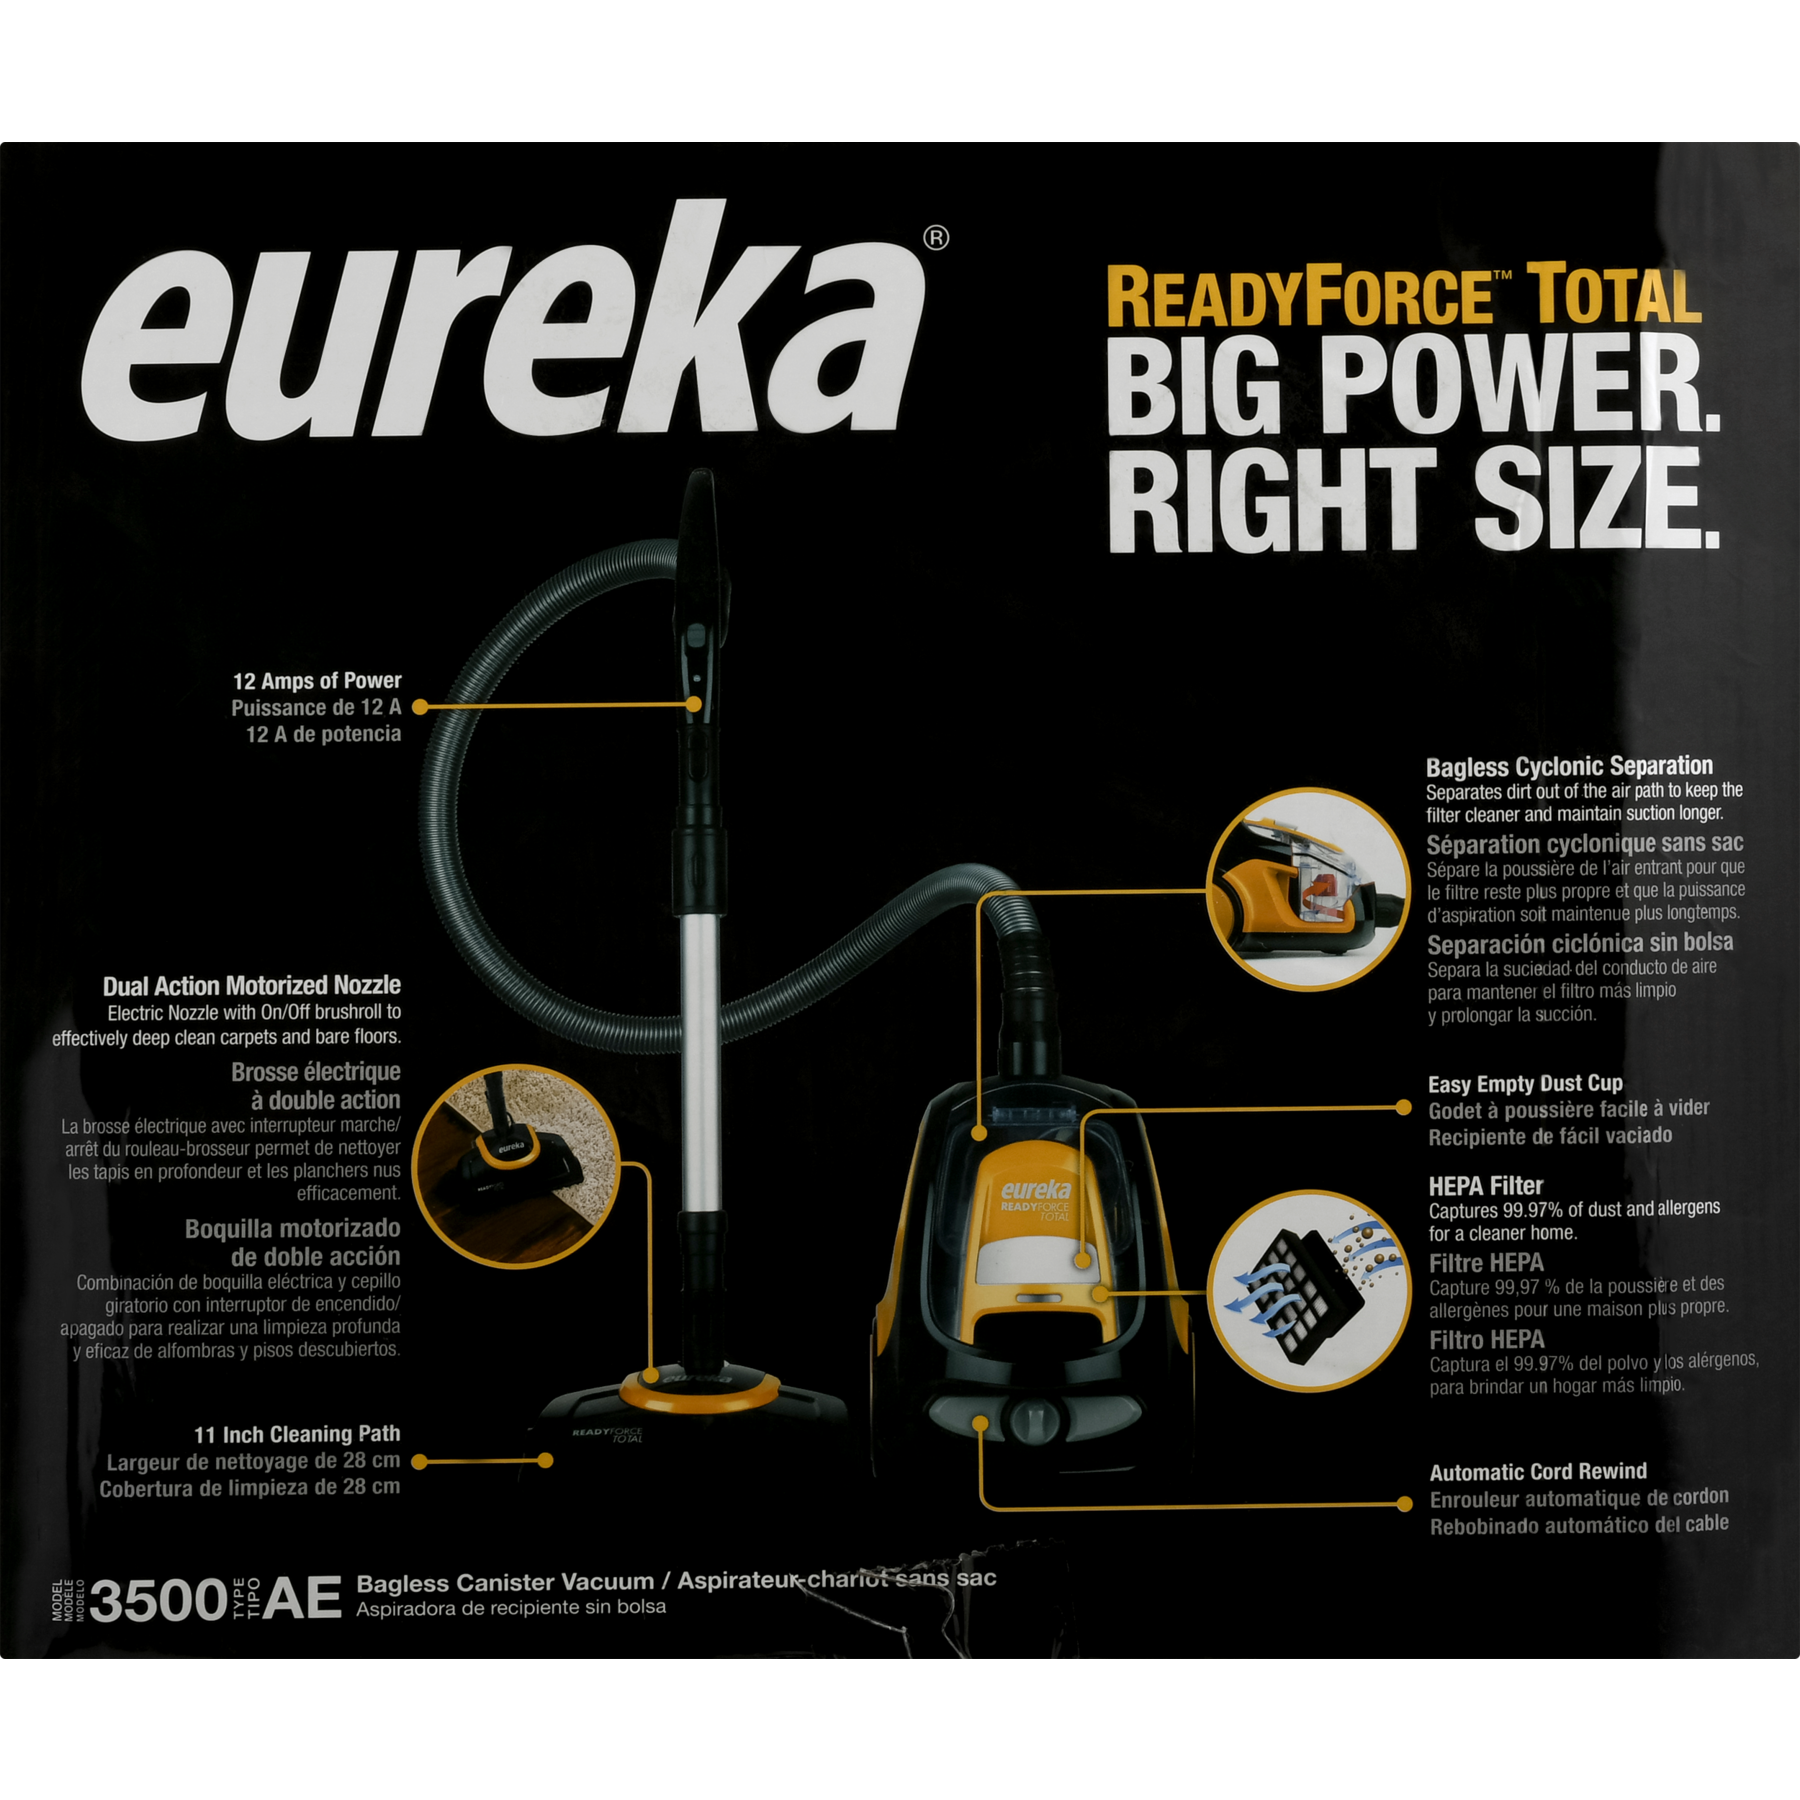 Eureka ReadyForce Total Bagless Canister Vacuum, 3500AE - image 5 of 7